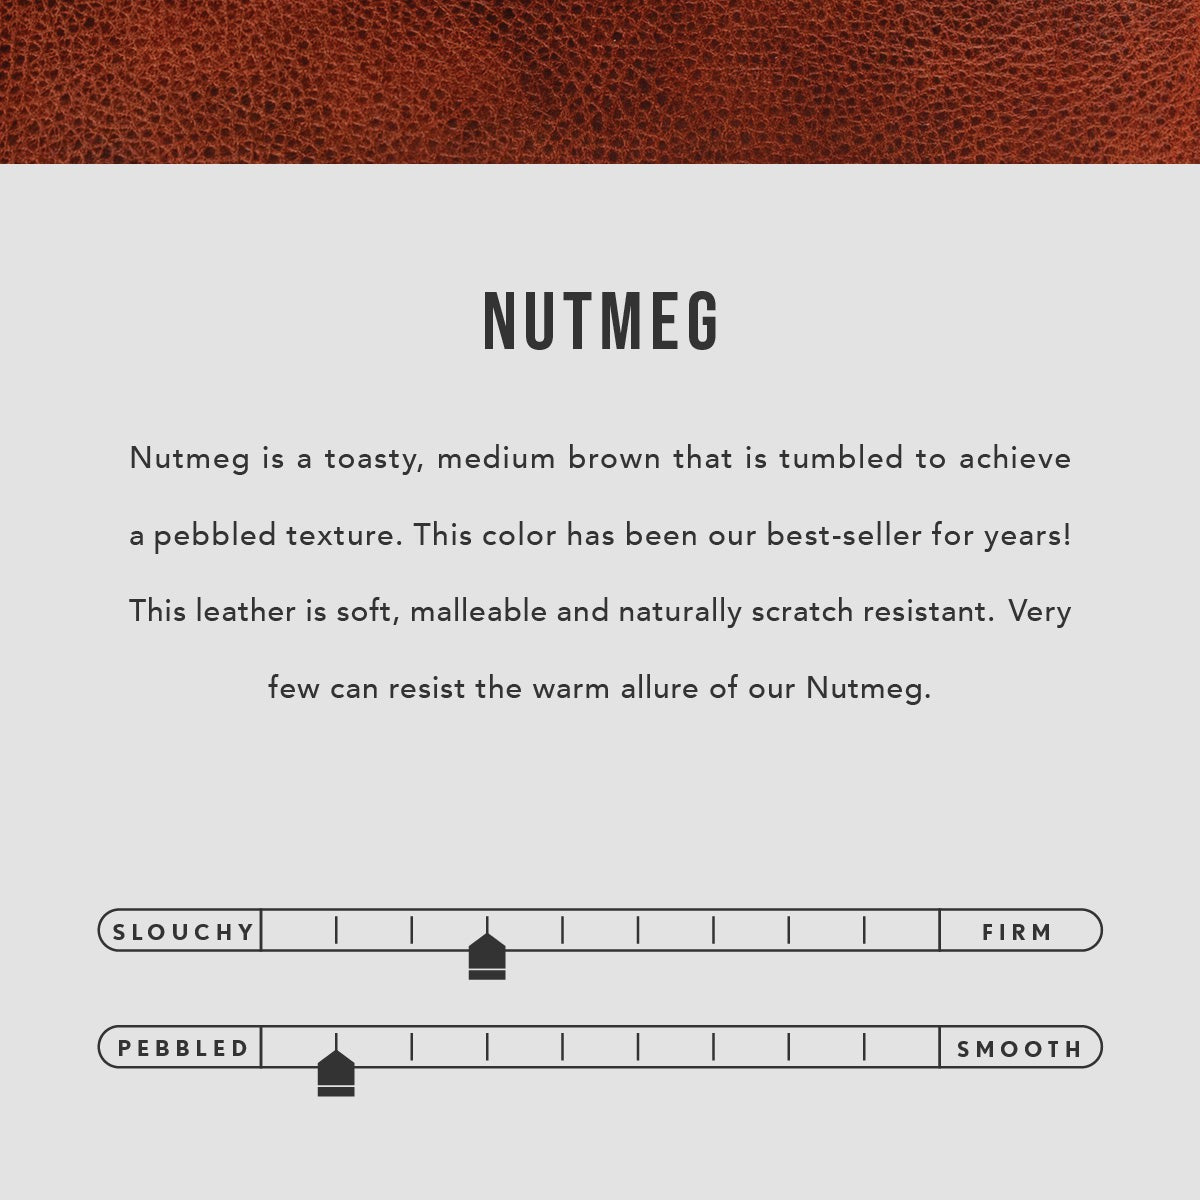 Nutmeg | infographic